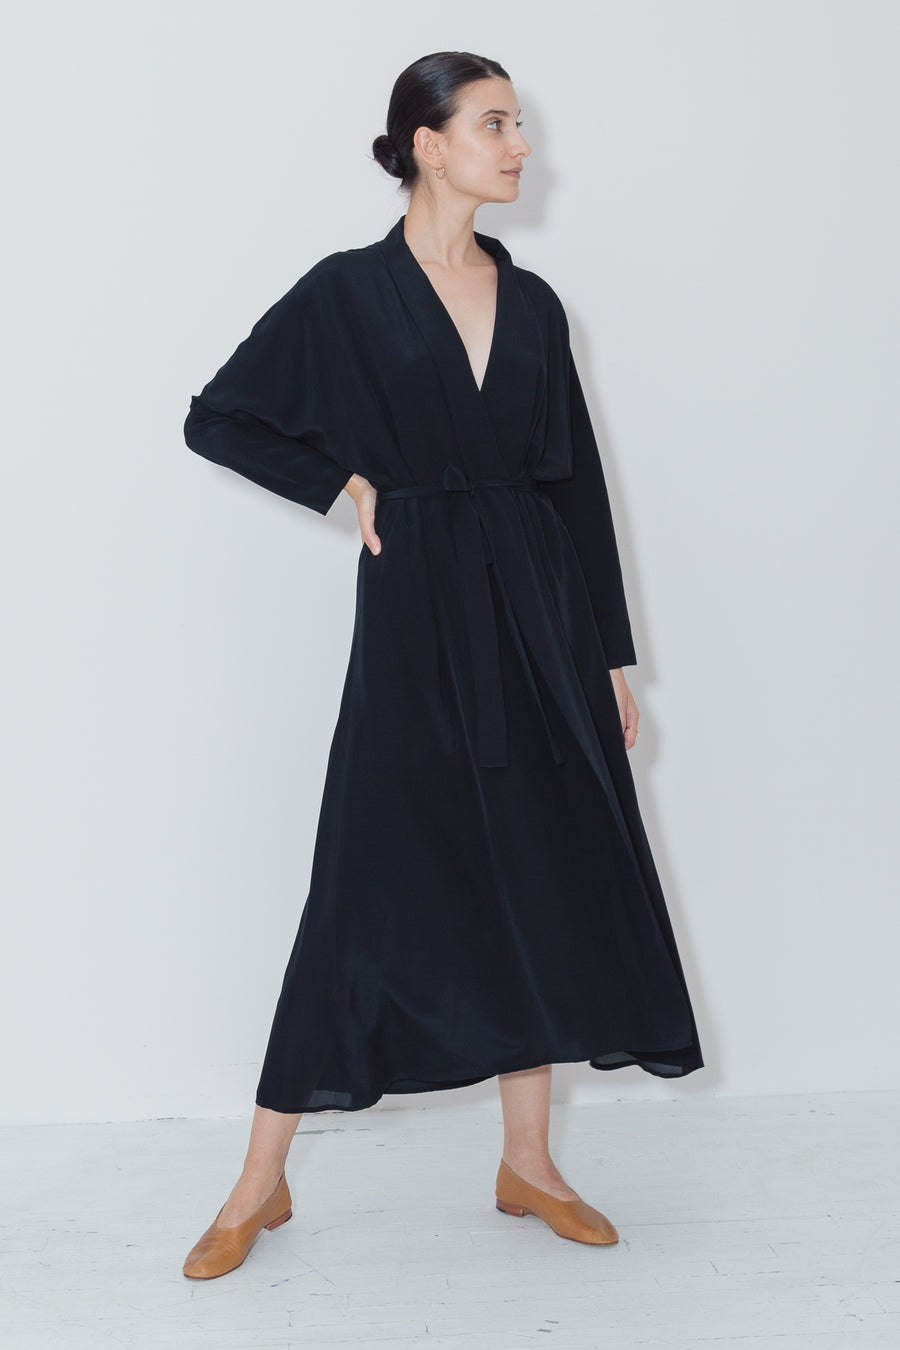 Black Kimono Robe Dress